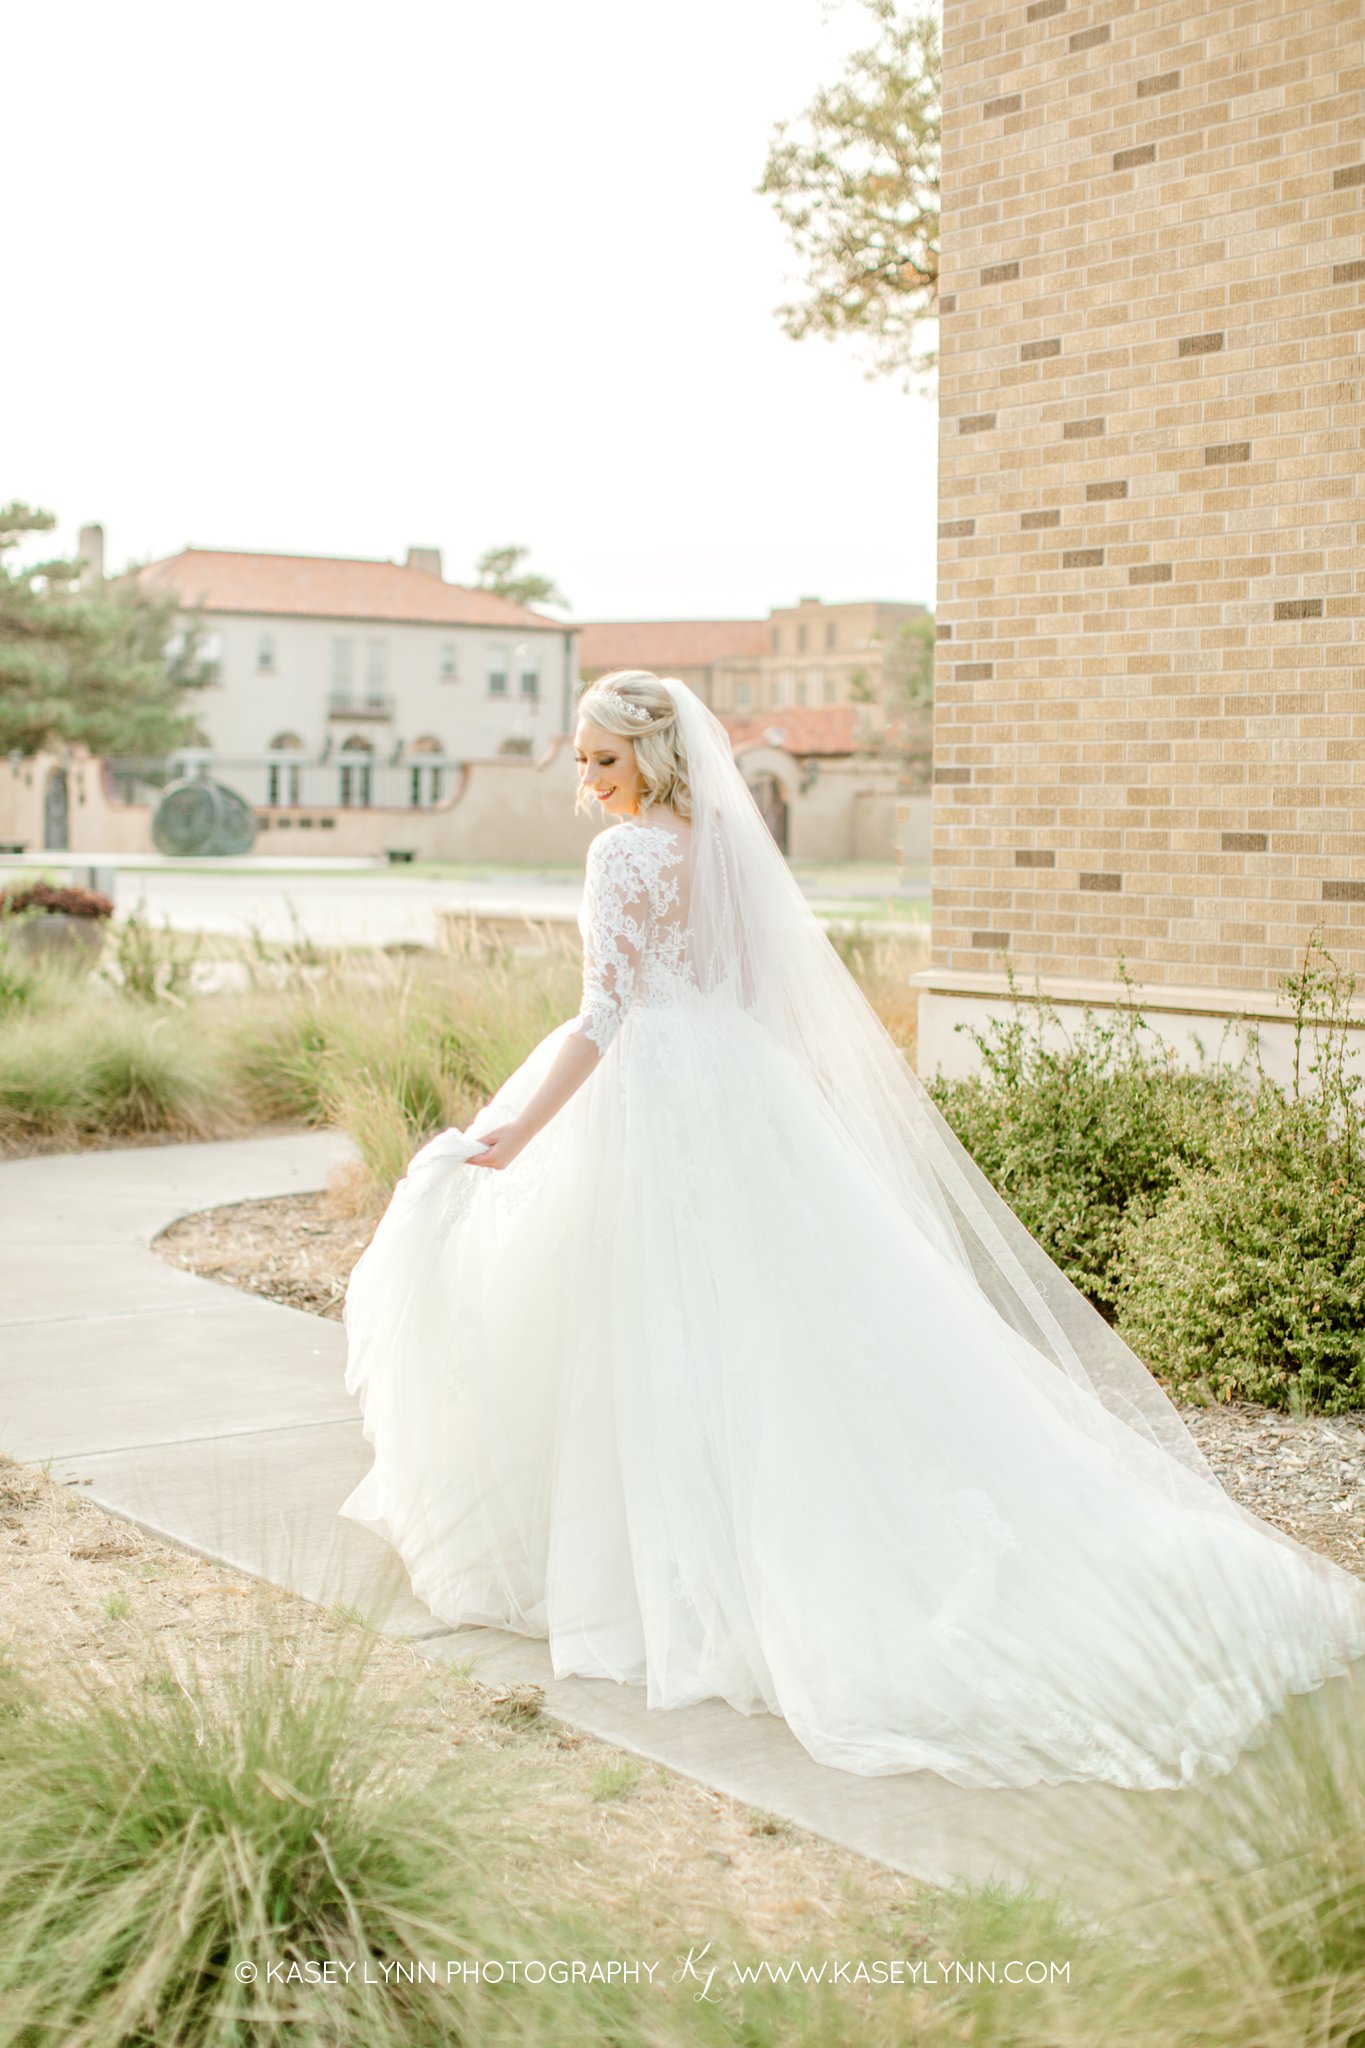 Texas Tech Wedding Photographer / Kasey Lynn Photography